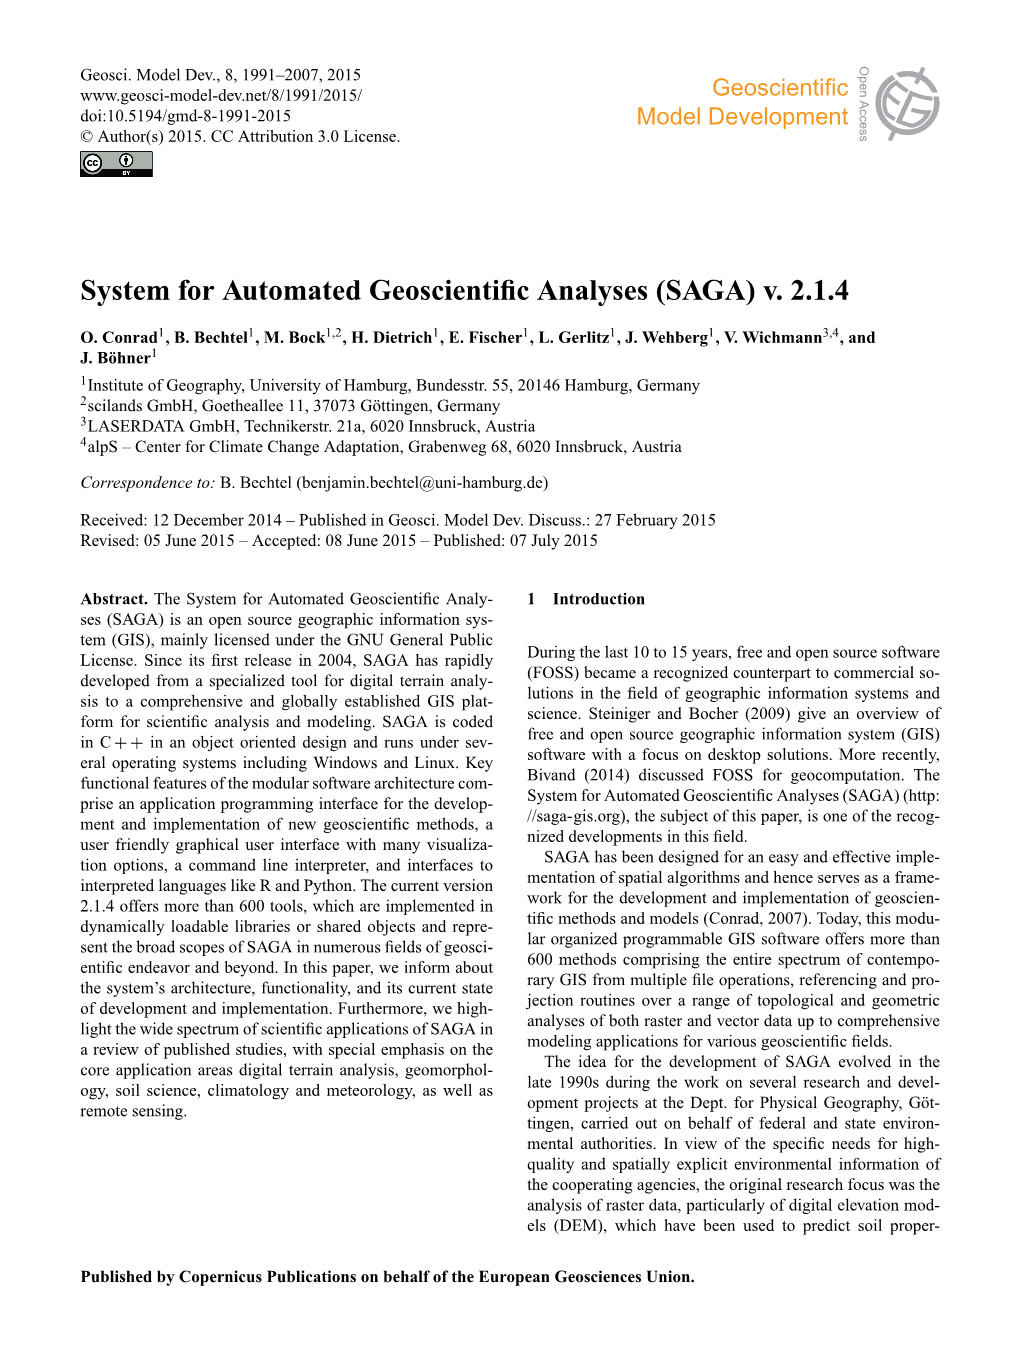 System for Automated Geoscientific Analyses (SAGA) V. 2.1.4